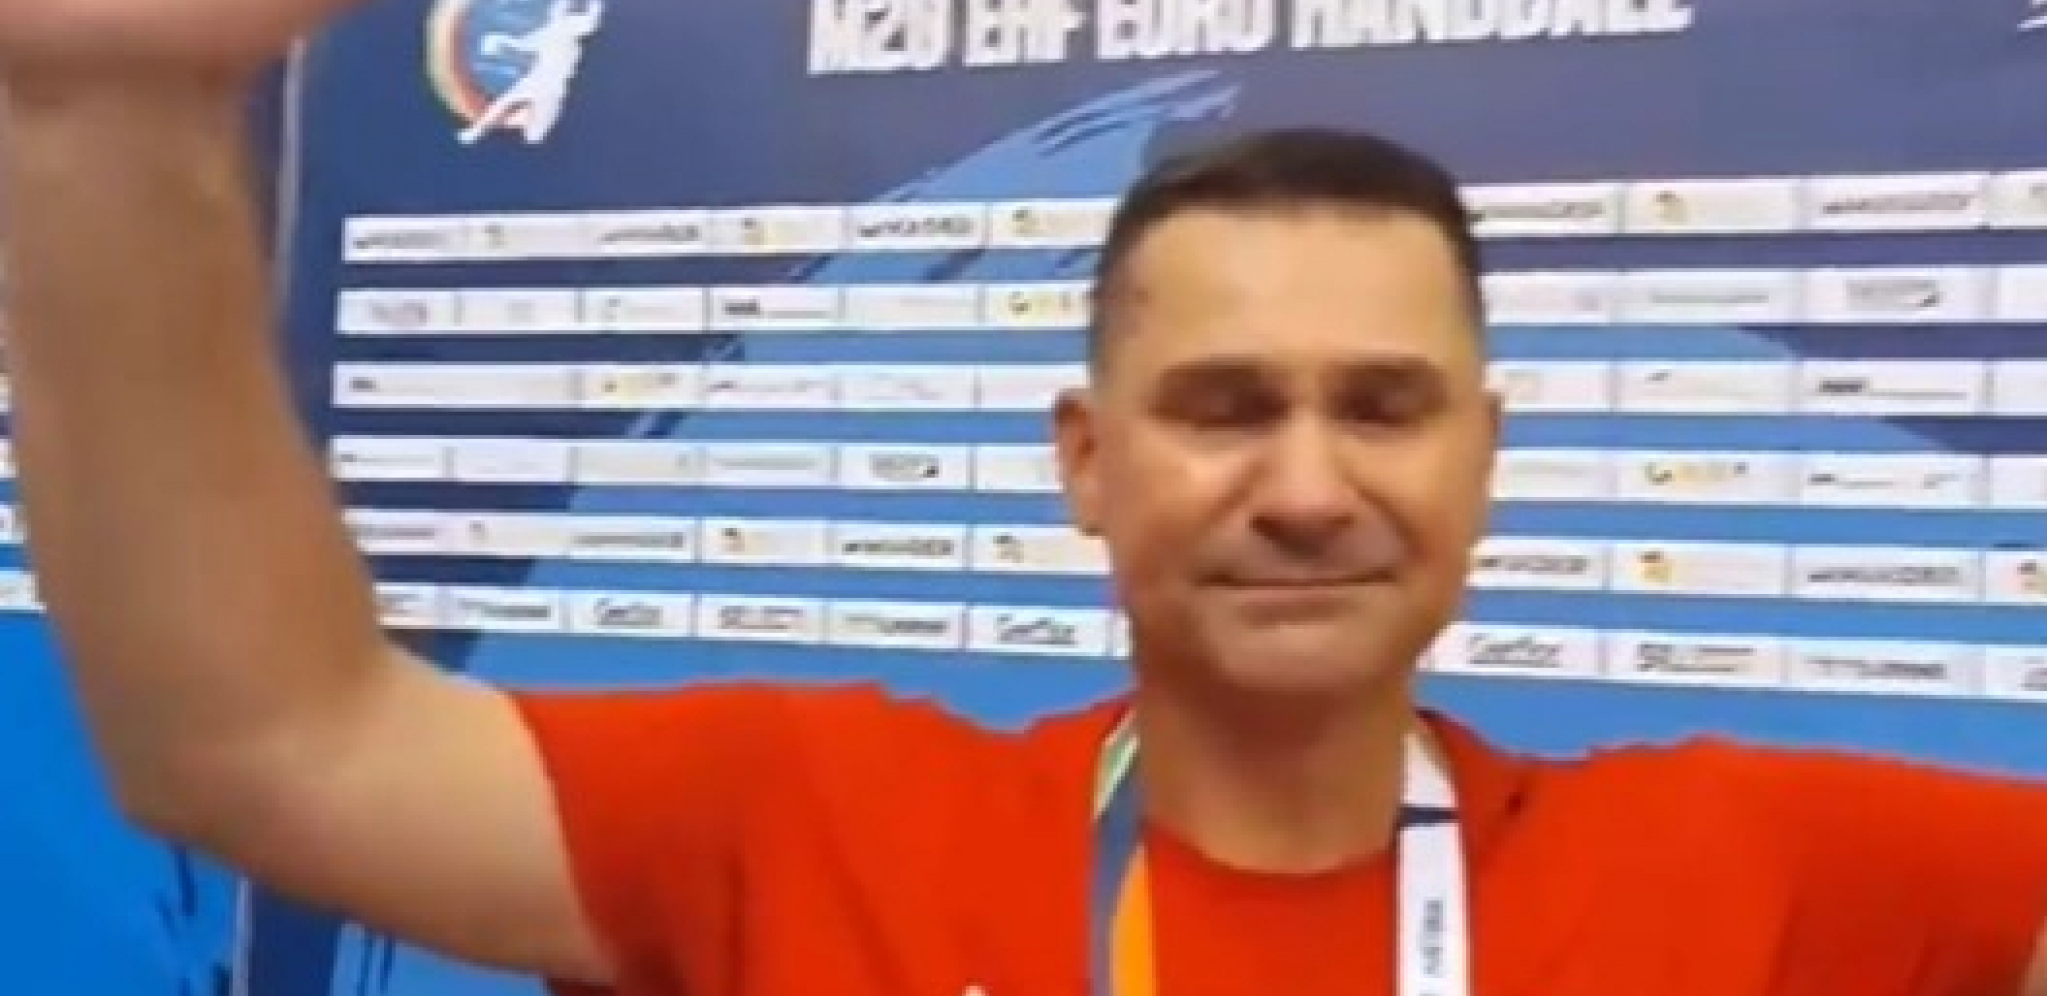 SUZE POSLE MEDALJE Selektor Srbije zaplakao: Tuku me emocije, pravi smo narod... (VIDEO)